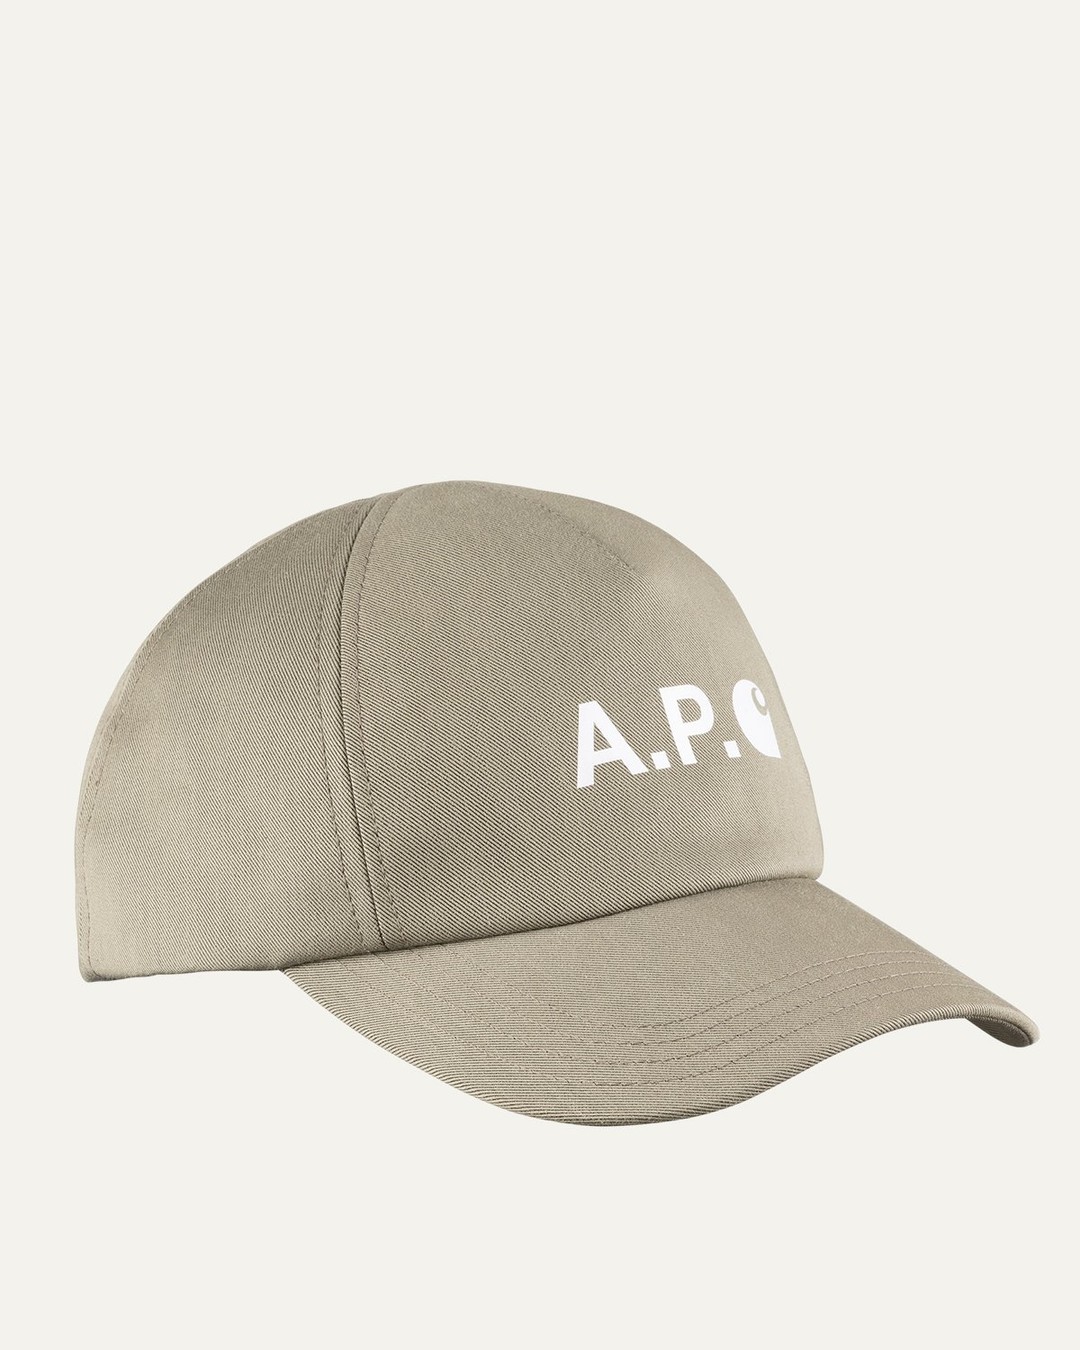 A.P.C. x Carhartt WIP – Cameron Baseball Cap Khaki - Caps - Green - Image 1